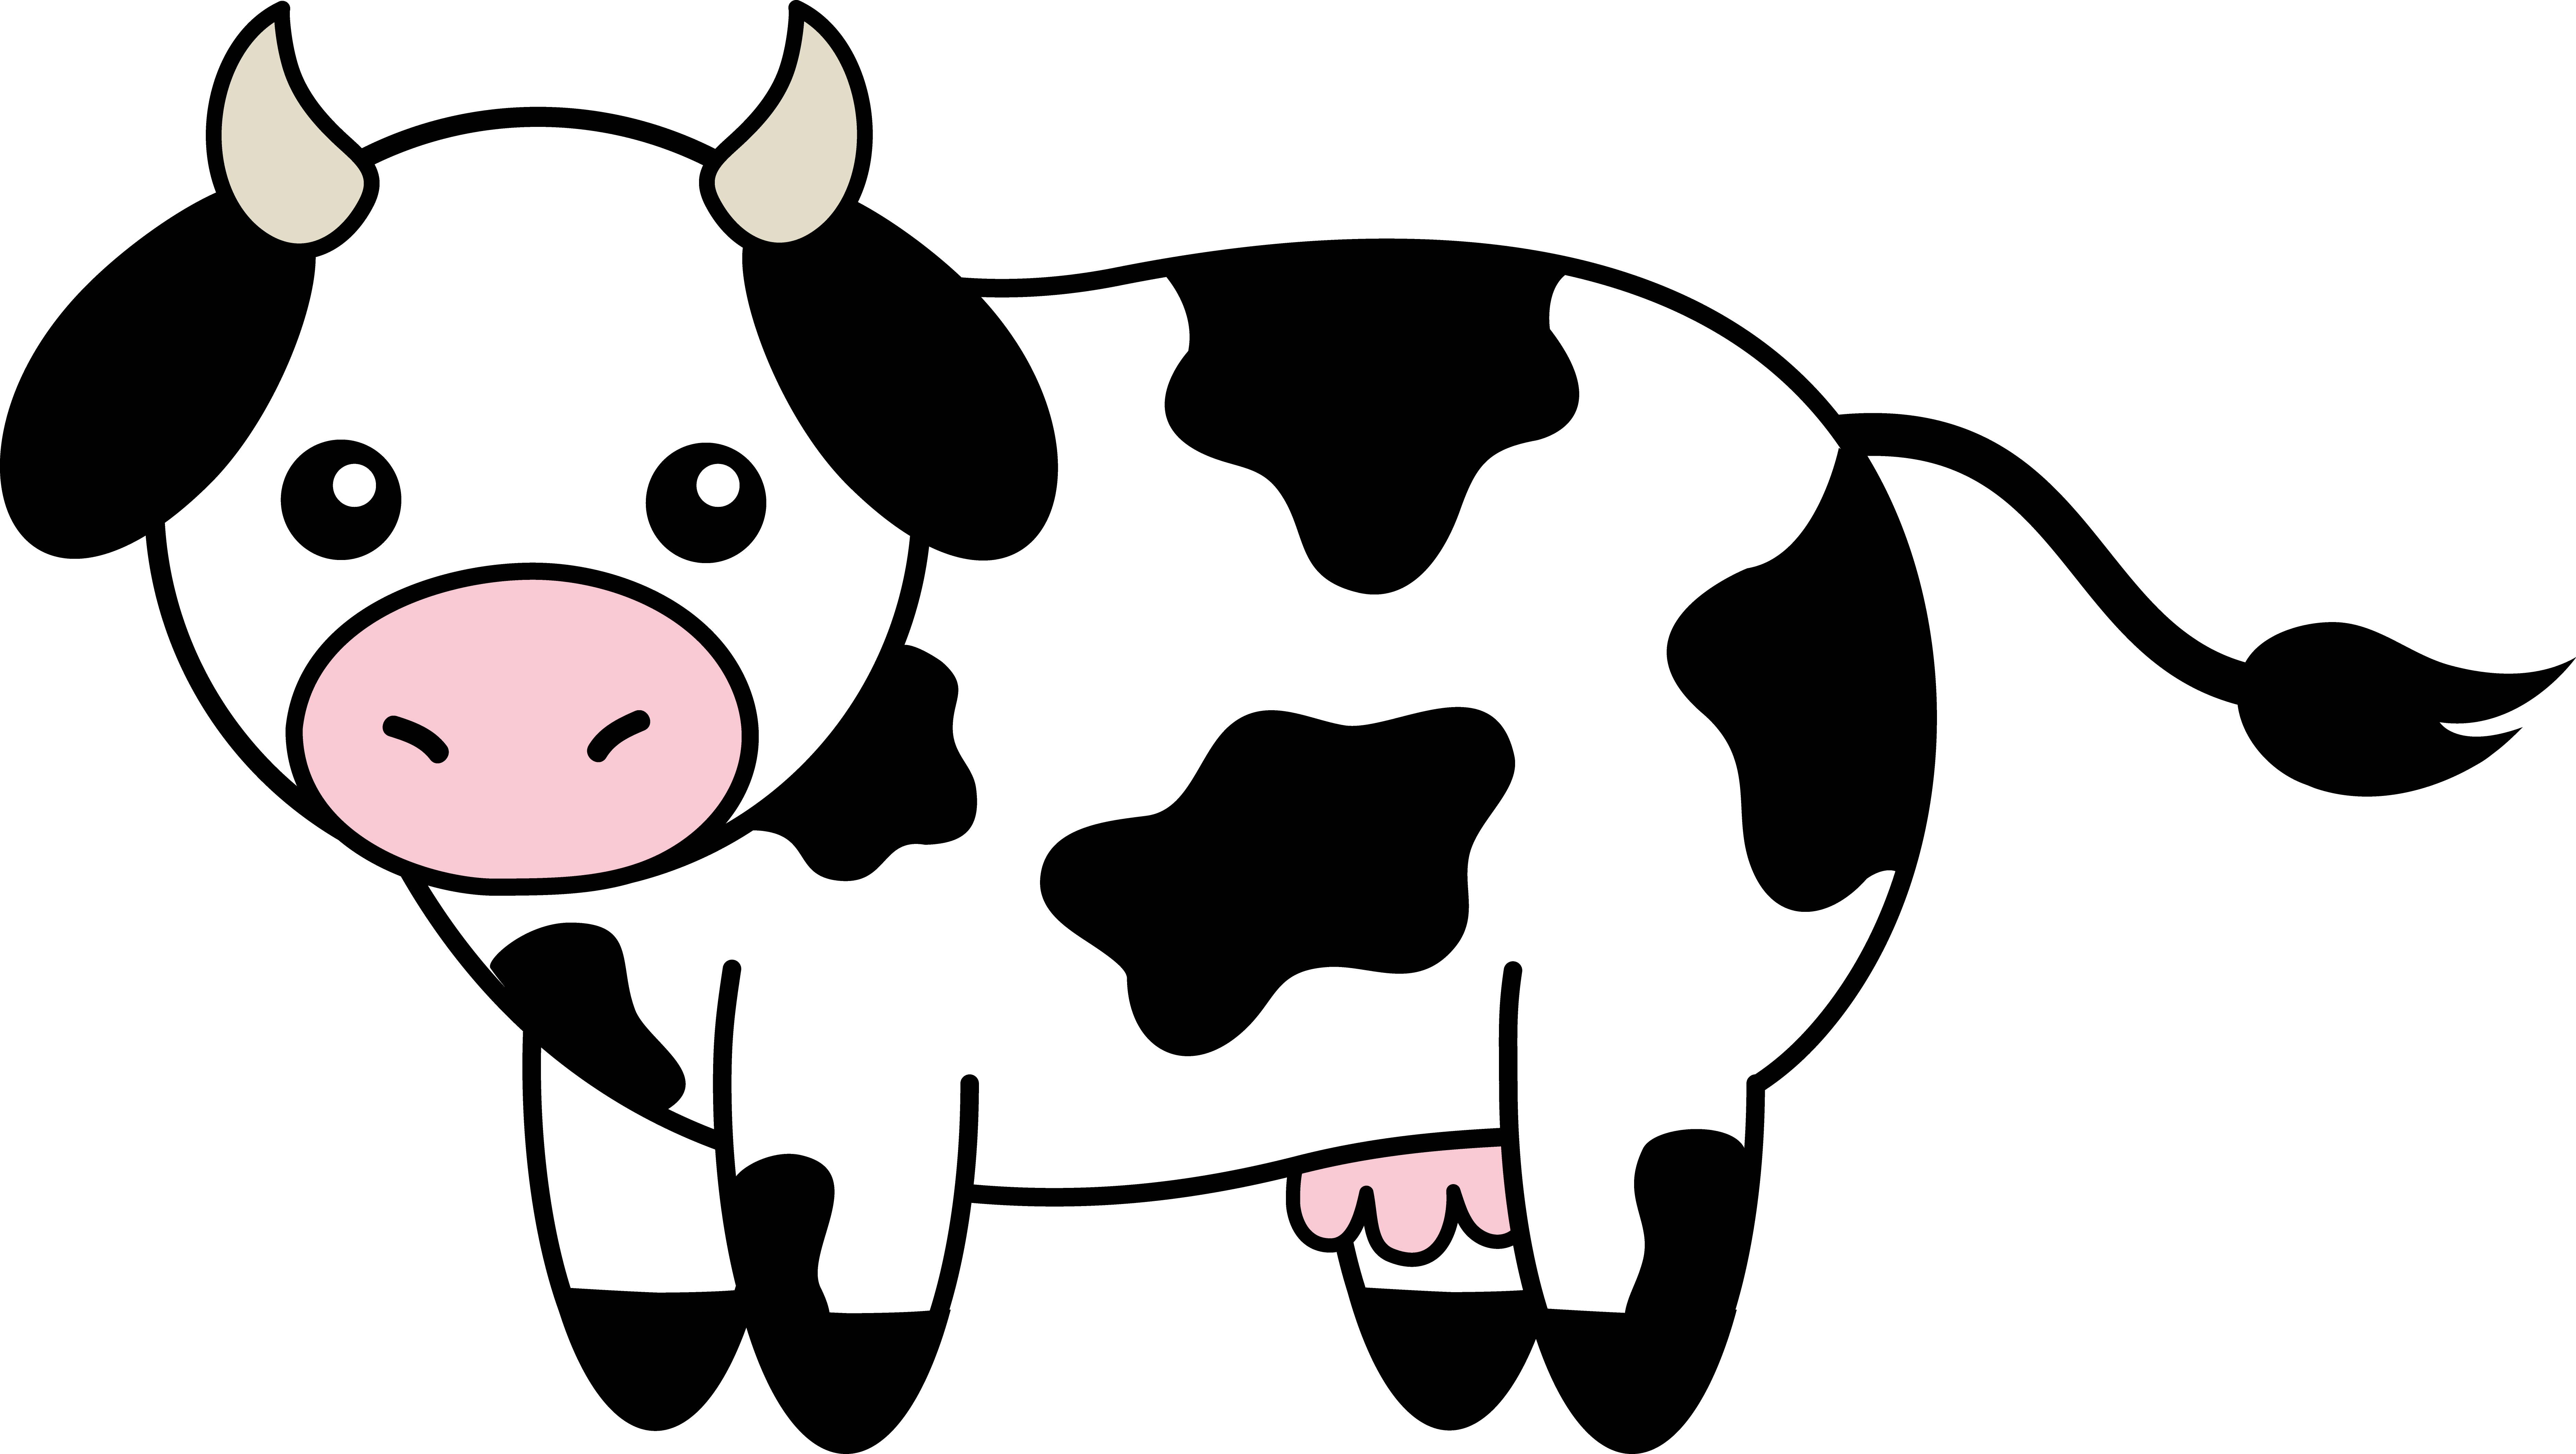 clipart cow comic